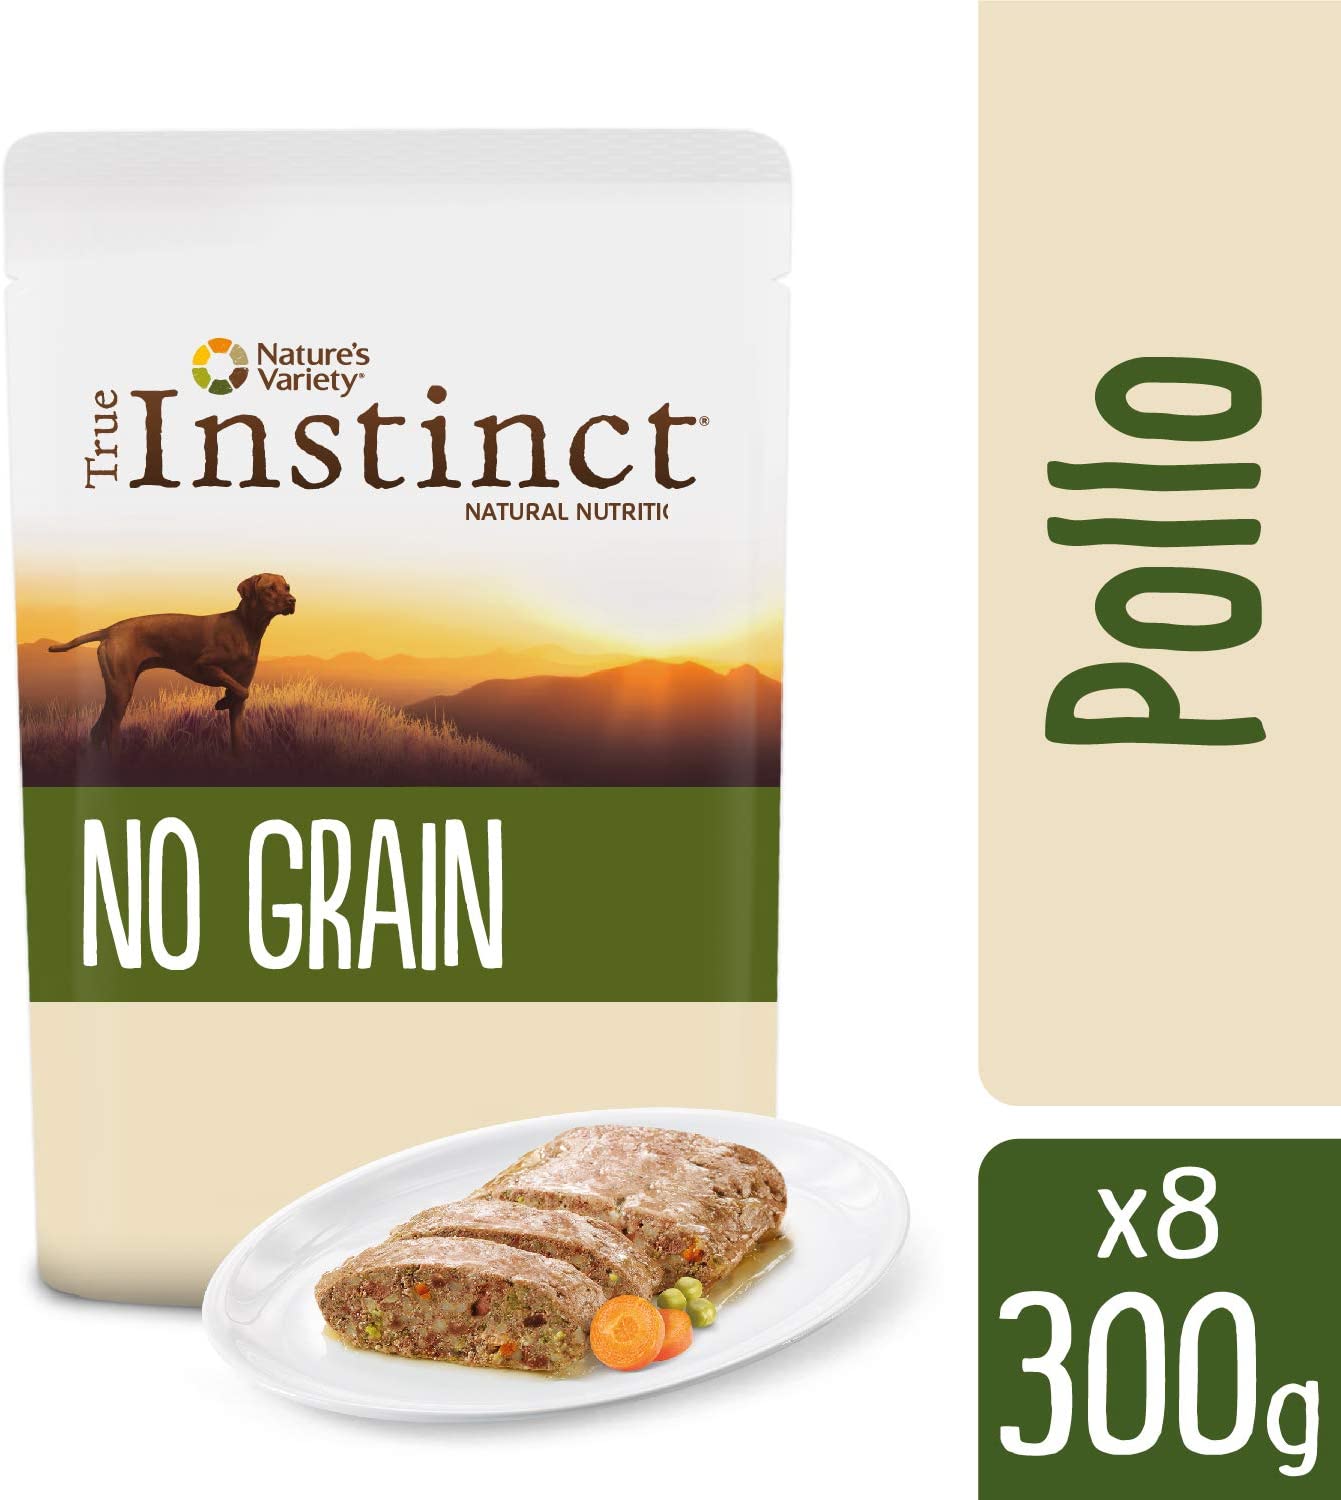  True Instinct No Grain Terrina para Perros Medium-Maxi con Pollo - 300 gr - Pack de 8 